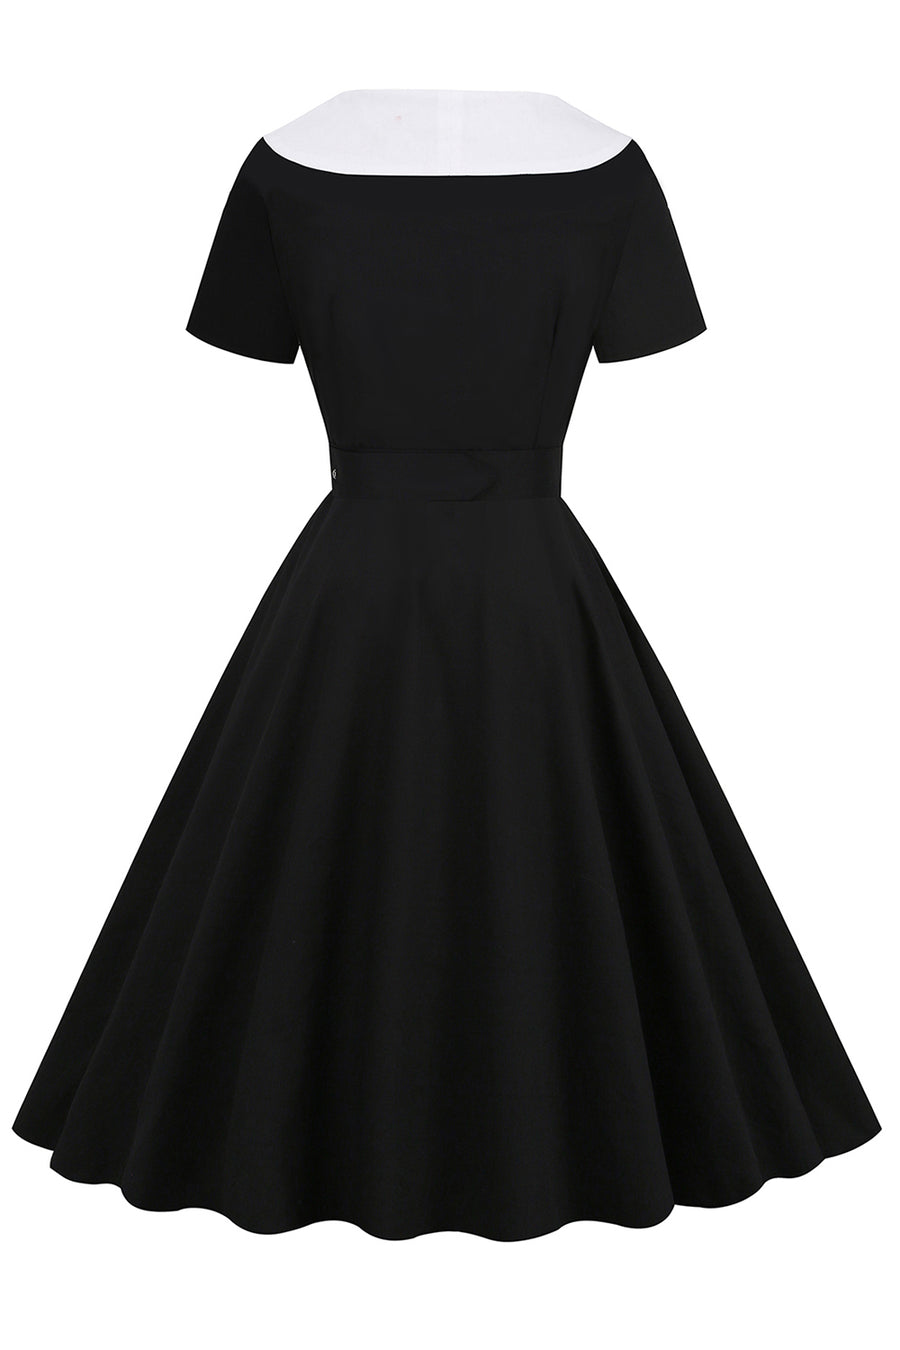 1950s Dresses | Vintage Retro 50s Dresses Online | Zapaka – Page 5 – ZAPAKA